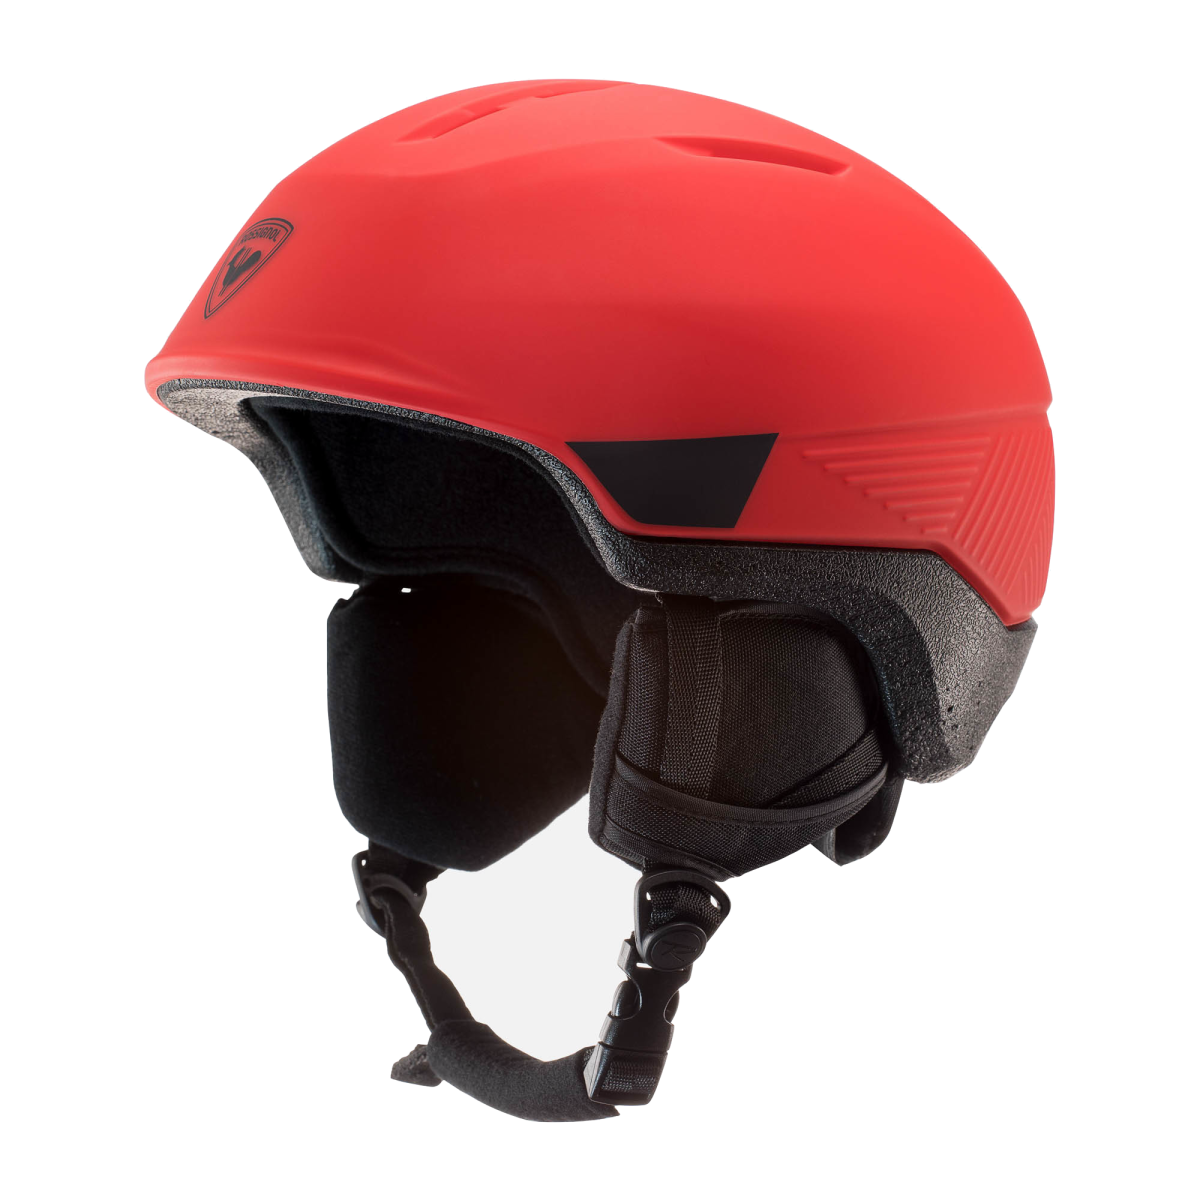 ROSSIGNOL FIT IMPACTS RED helmet